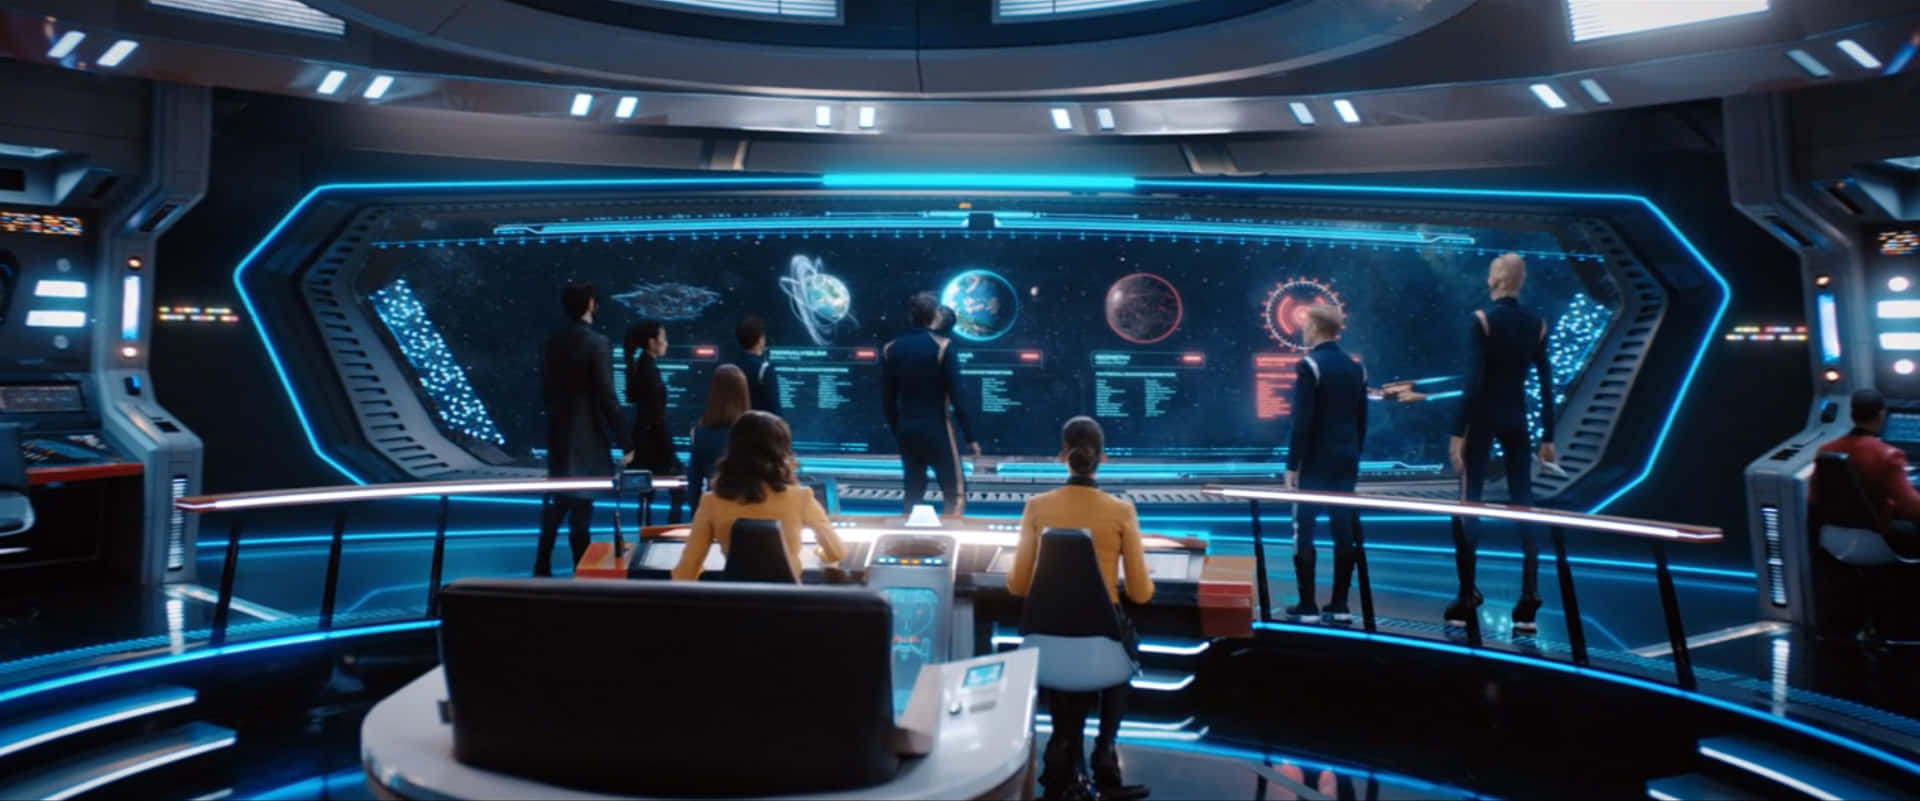 Star Trek Enterprise Bridge Discovery Screen Still Shot Wallpaper